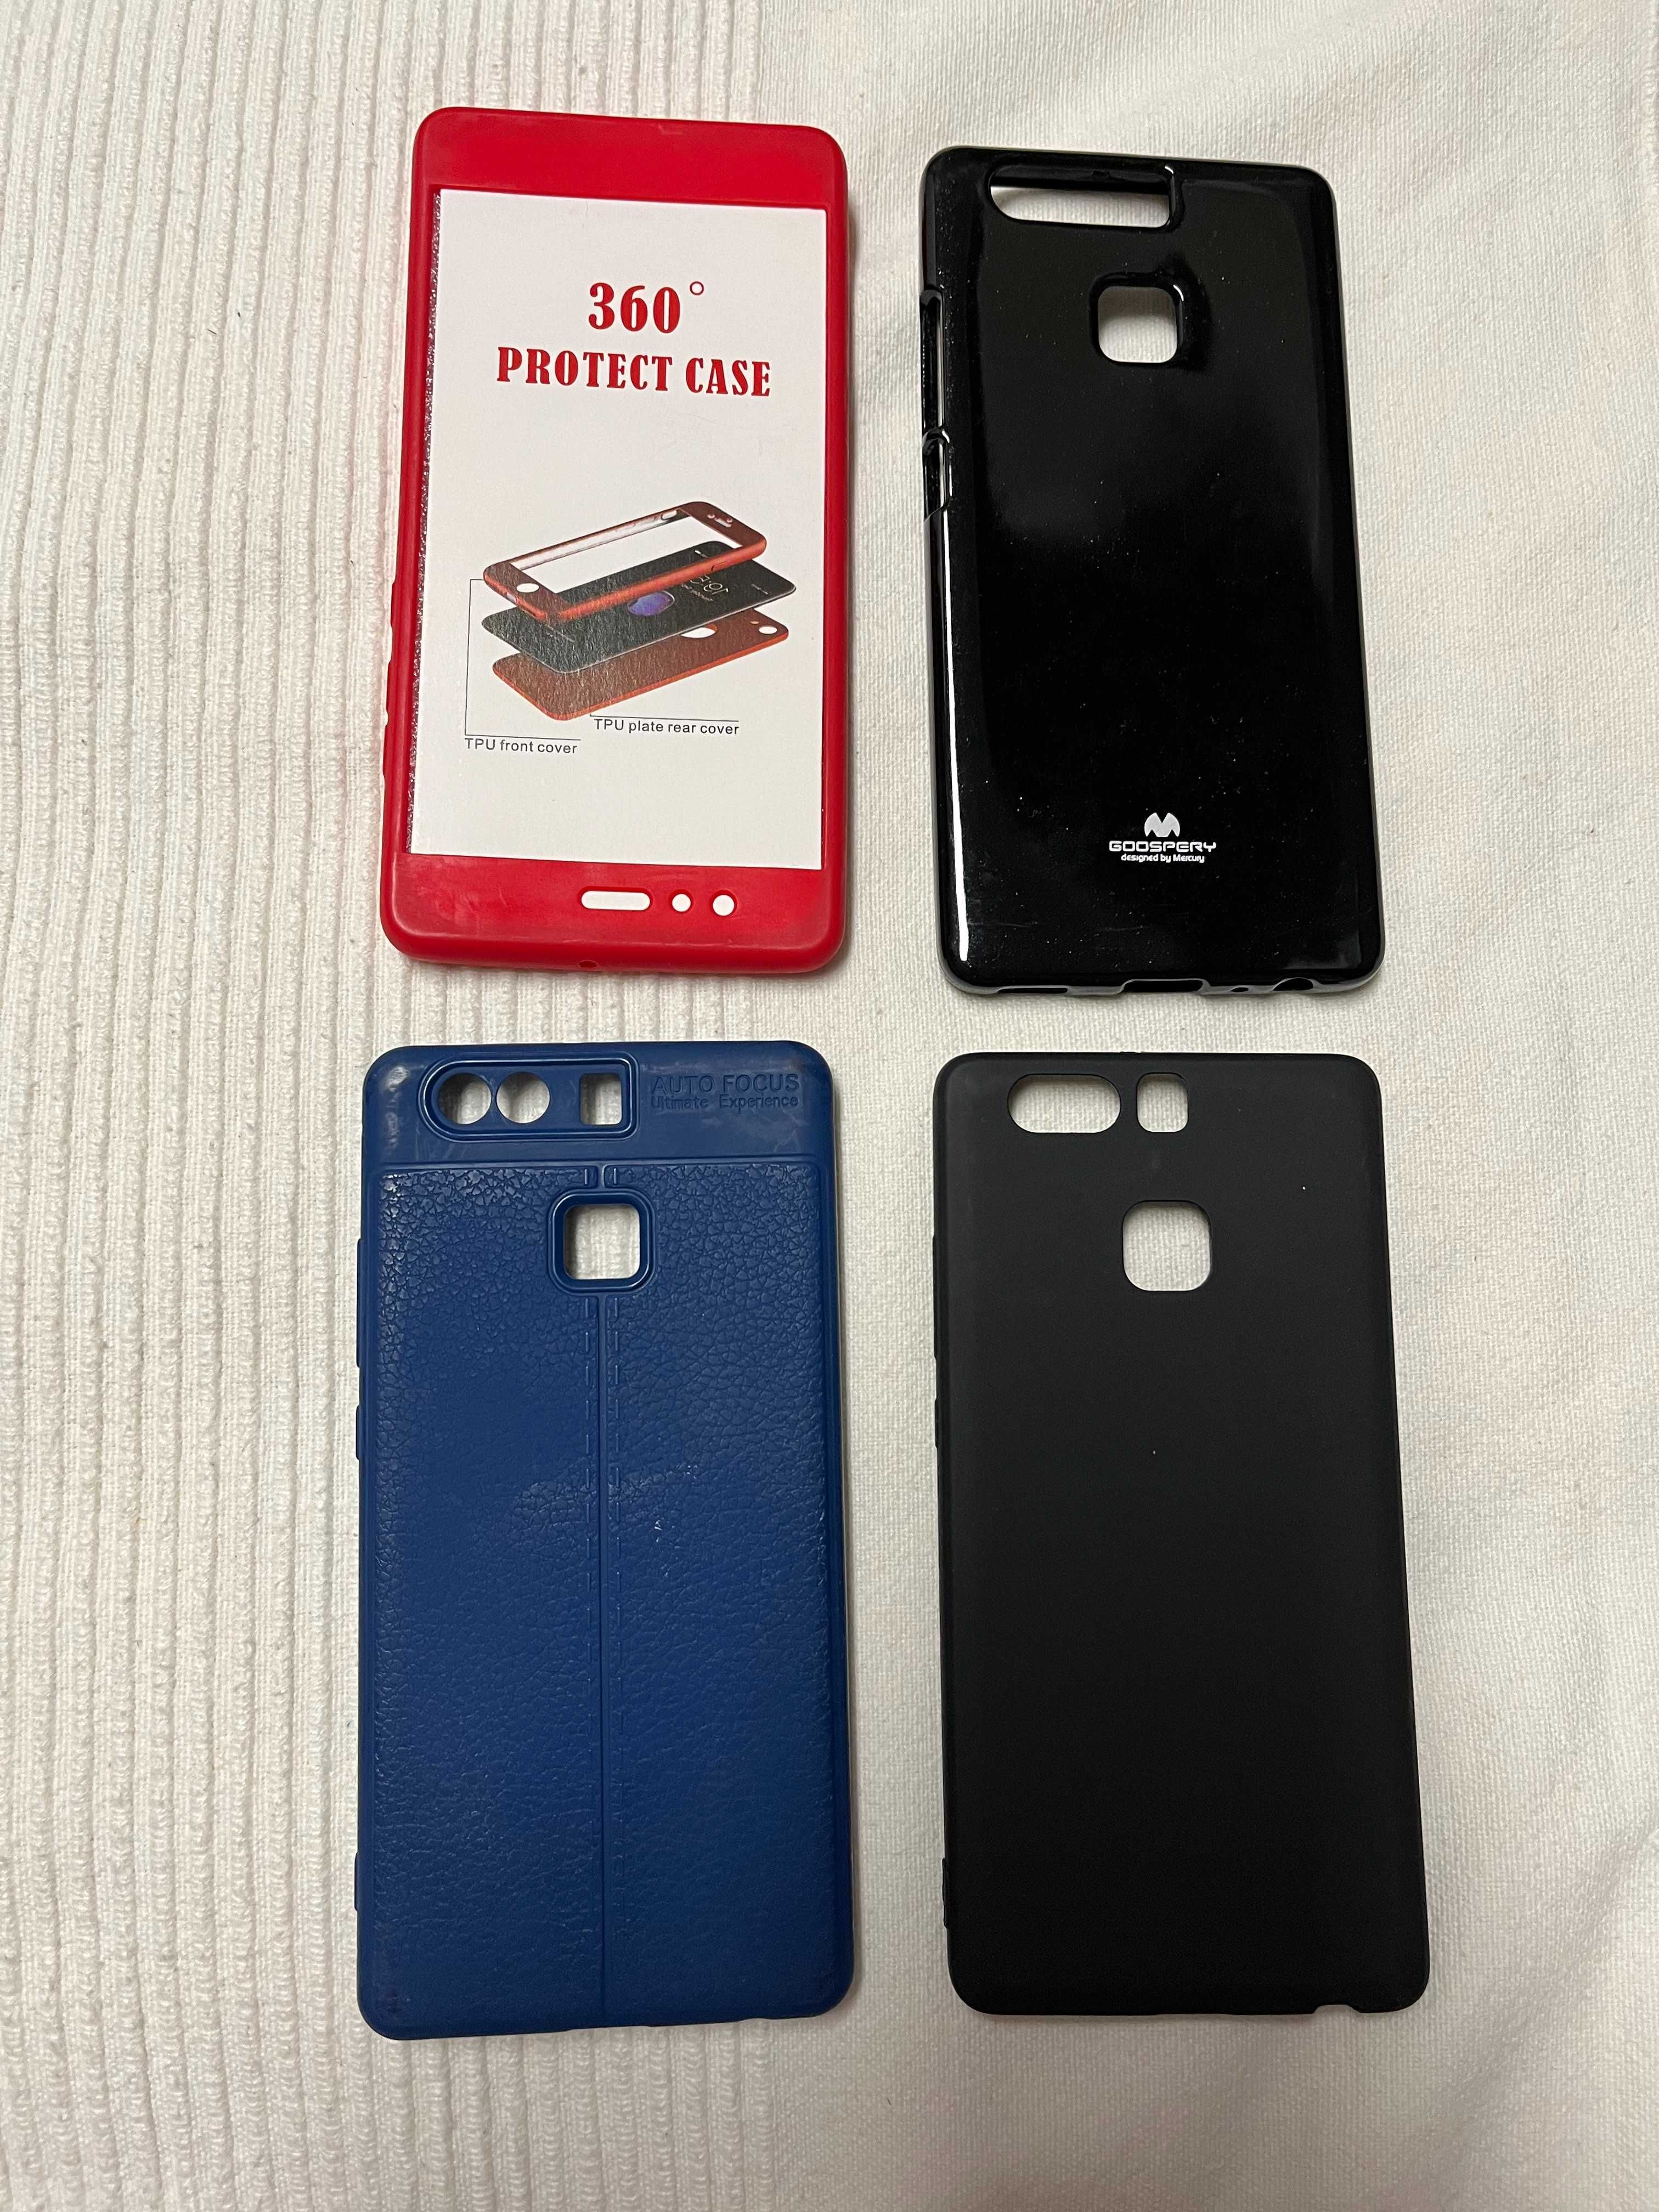 Akcesoria Huawei P9 case etui silikon szkło ochrona telefon smartfon